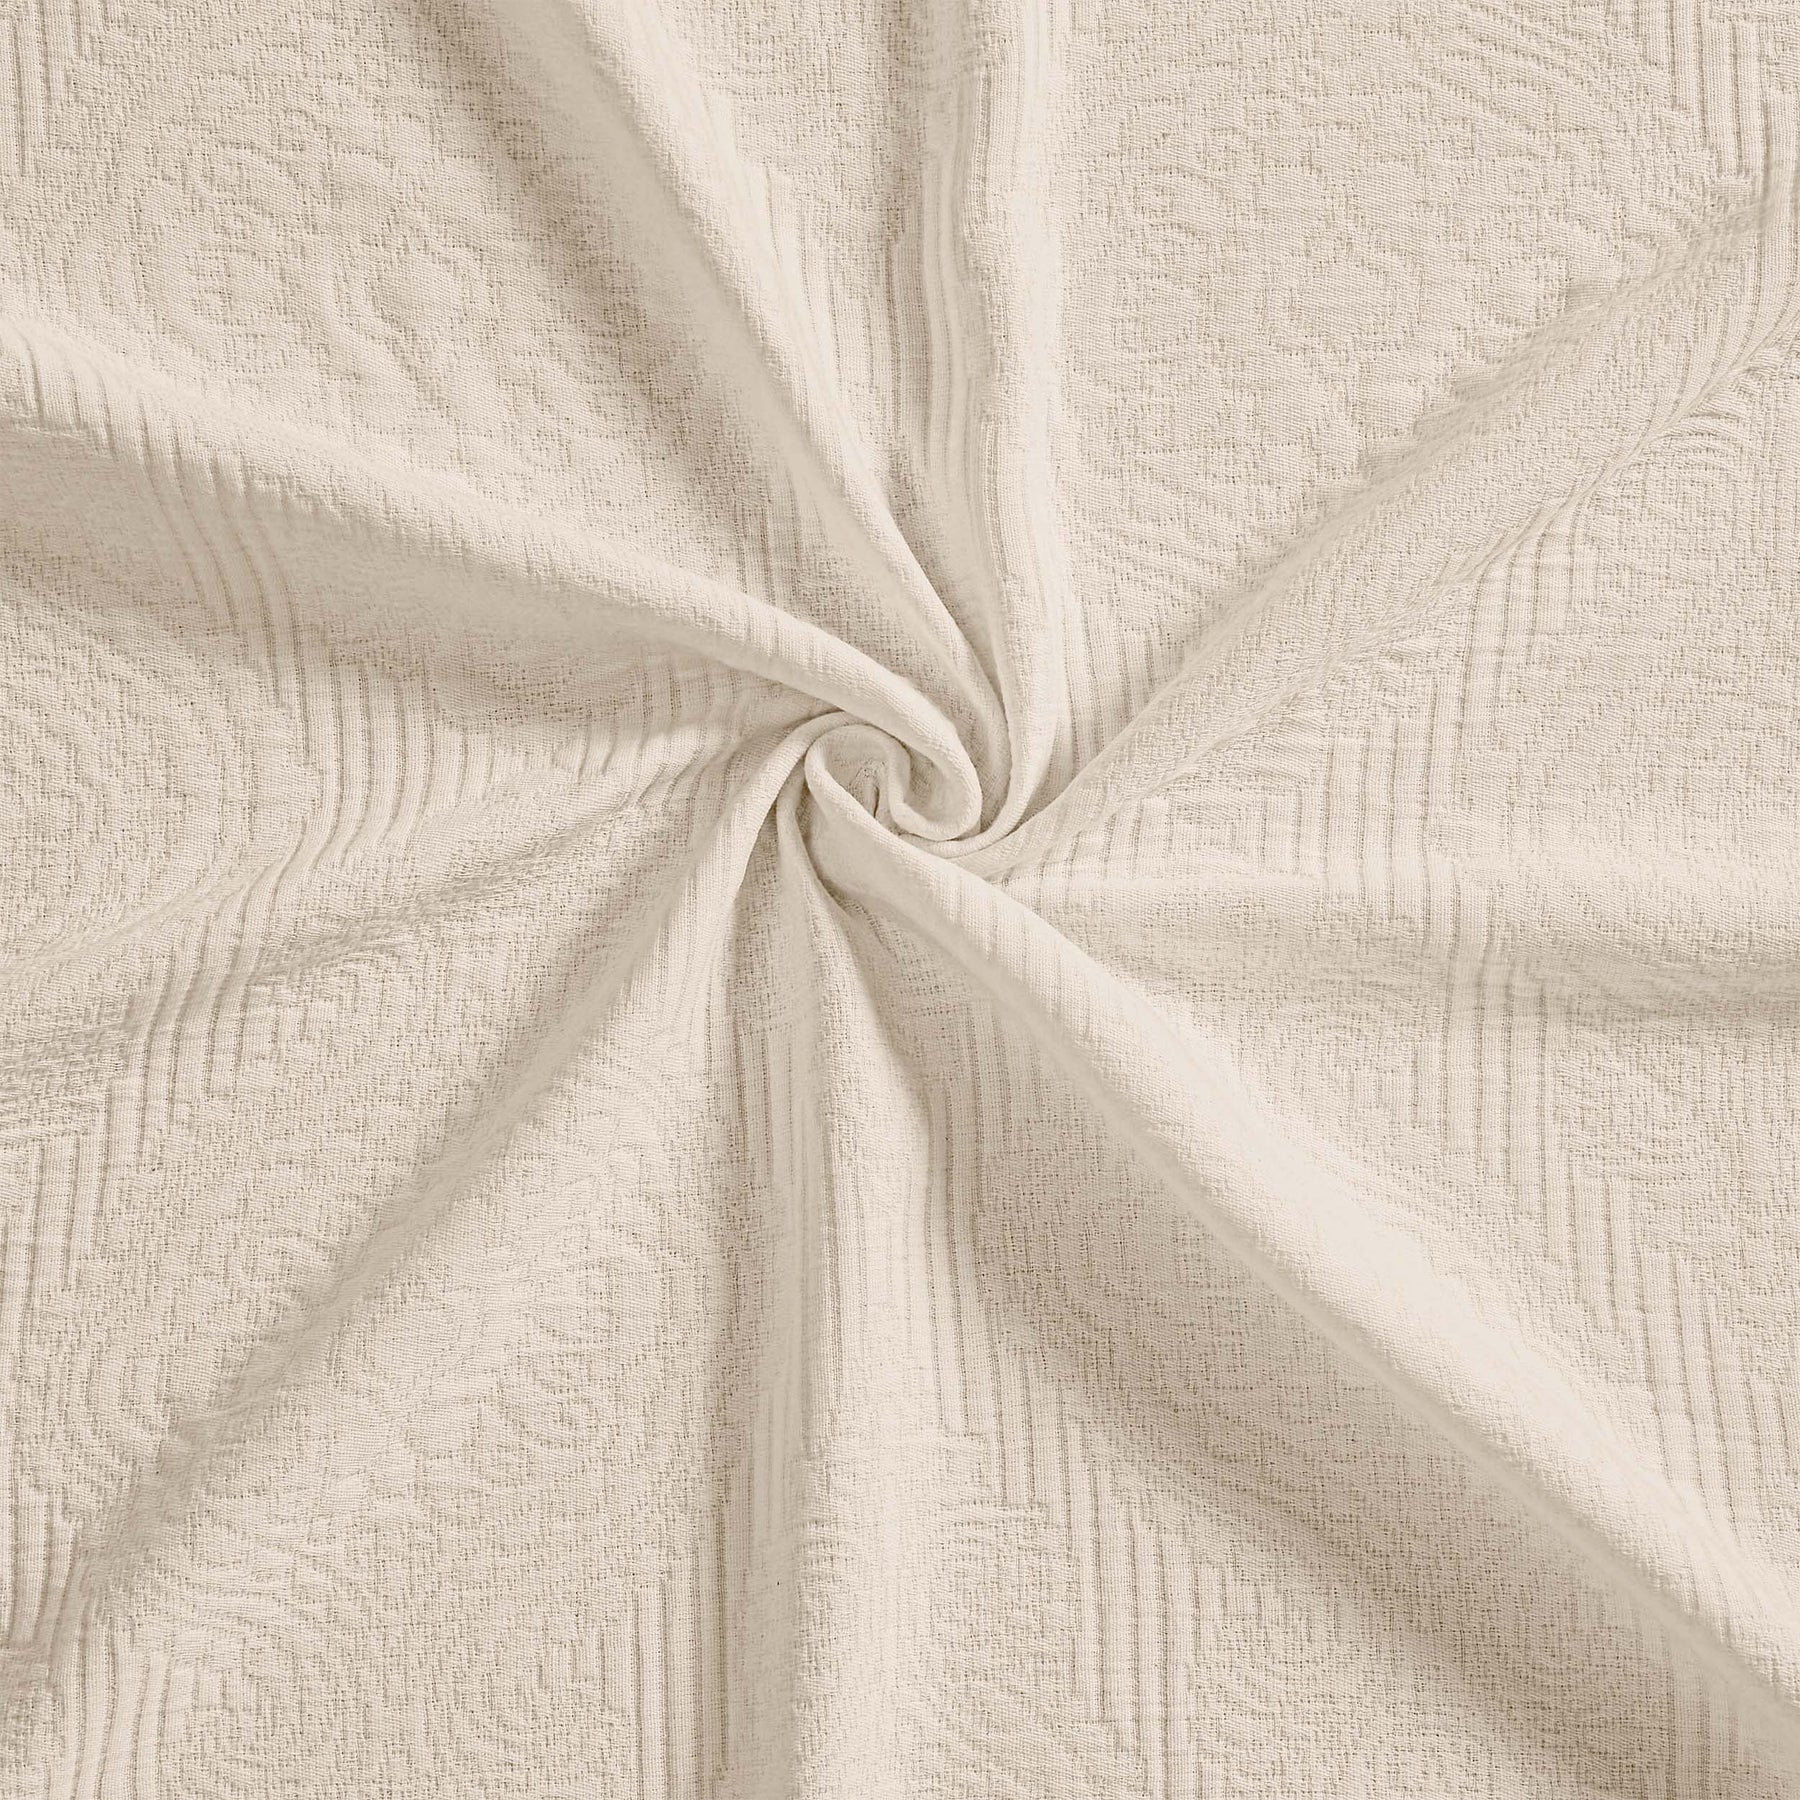 Florin Cotton Matelasse Weave Jacquard Scroll Medallion Bedspread Set - Ivory